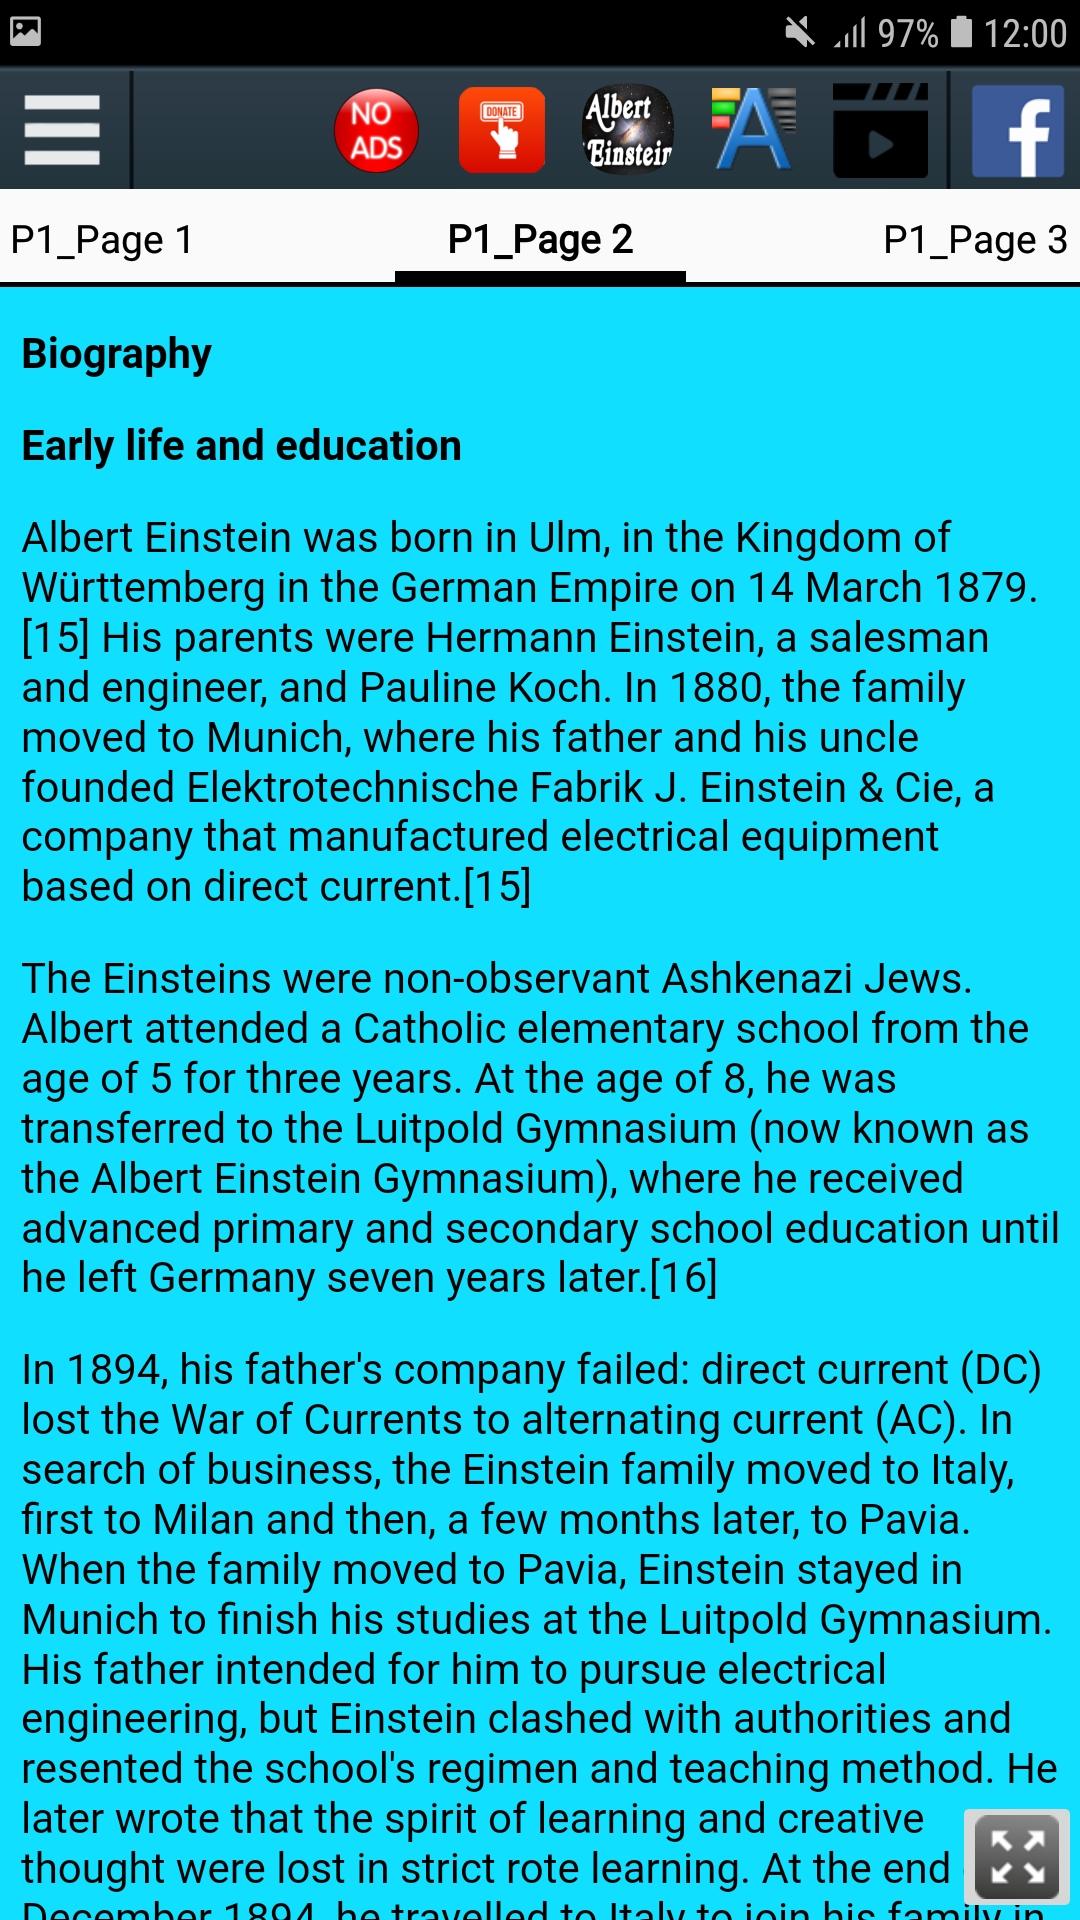 Android application Biography of Albert Einstein screenshort